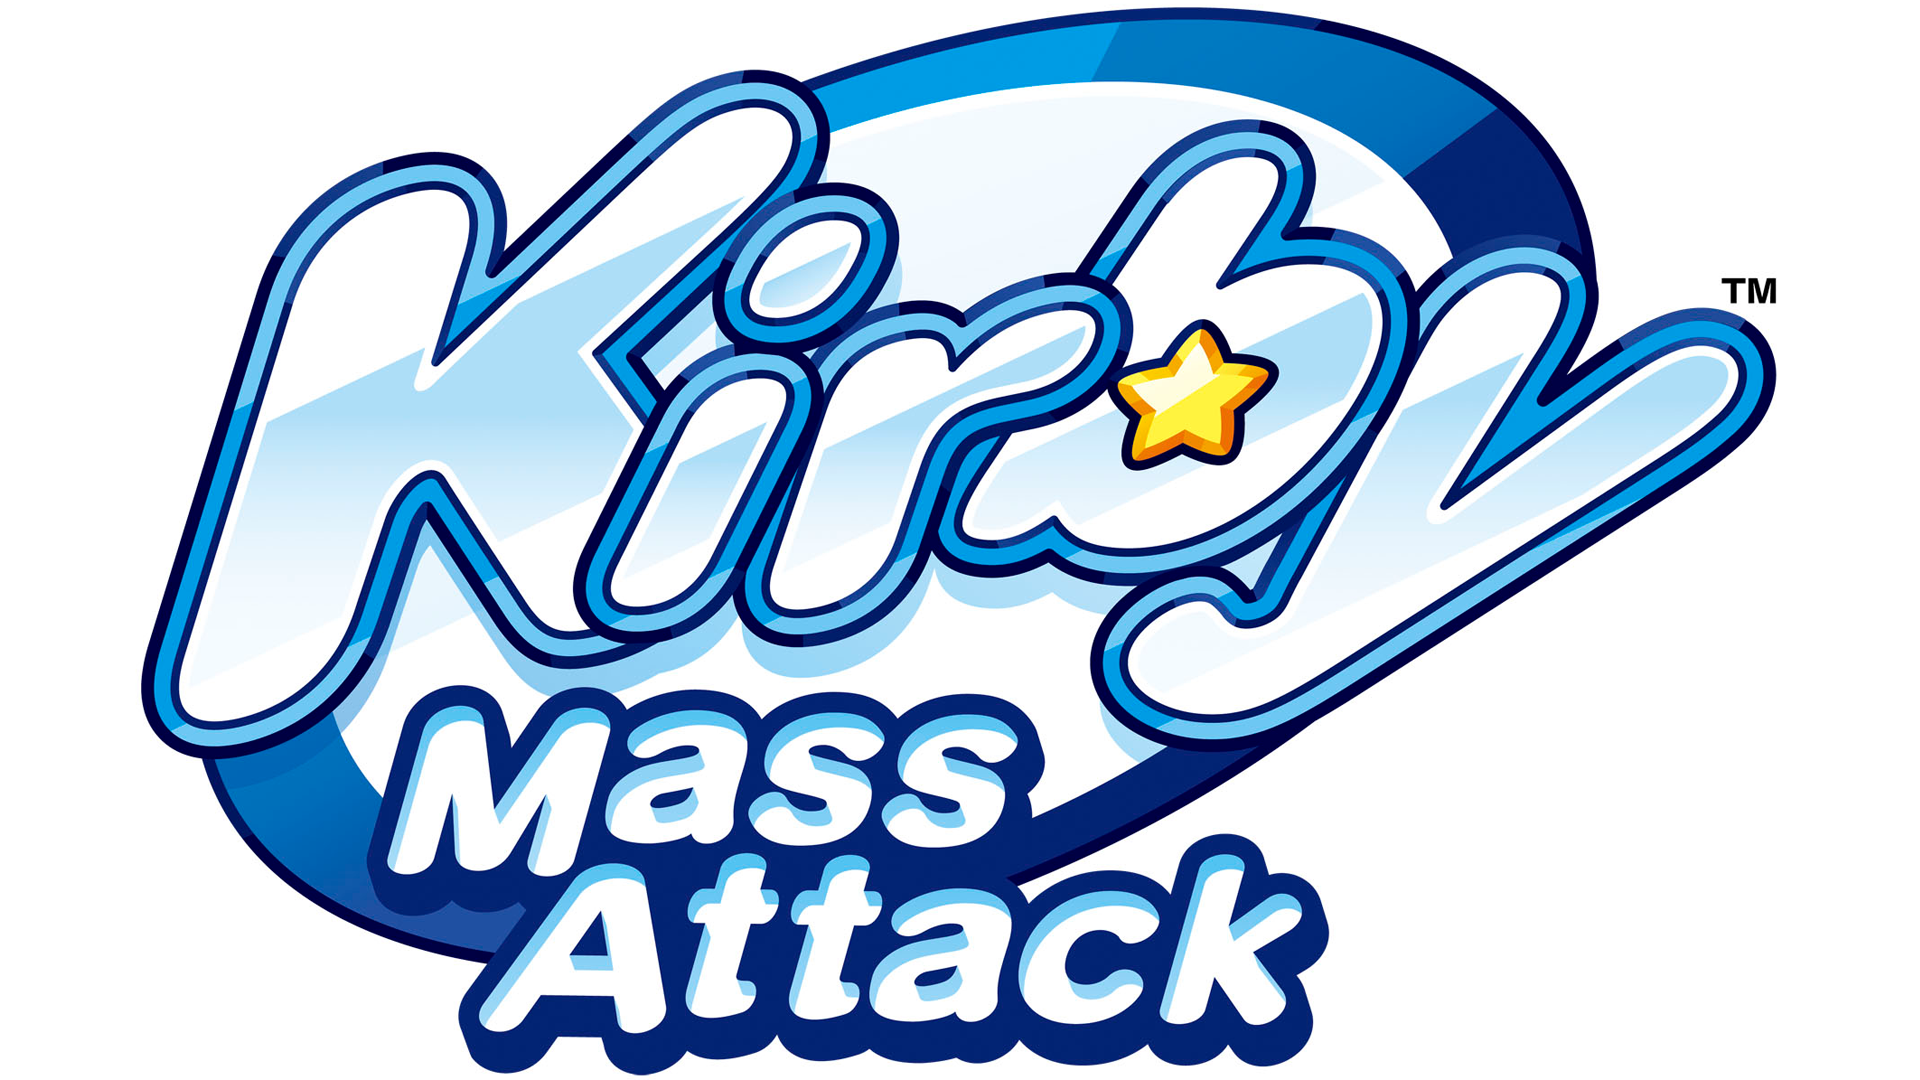 Kirby Mass Attack Logo